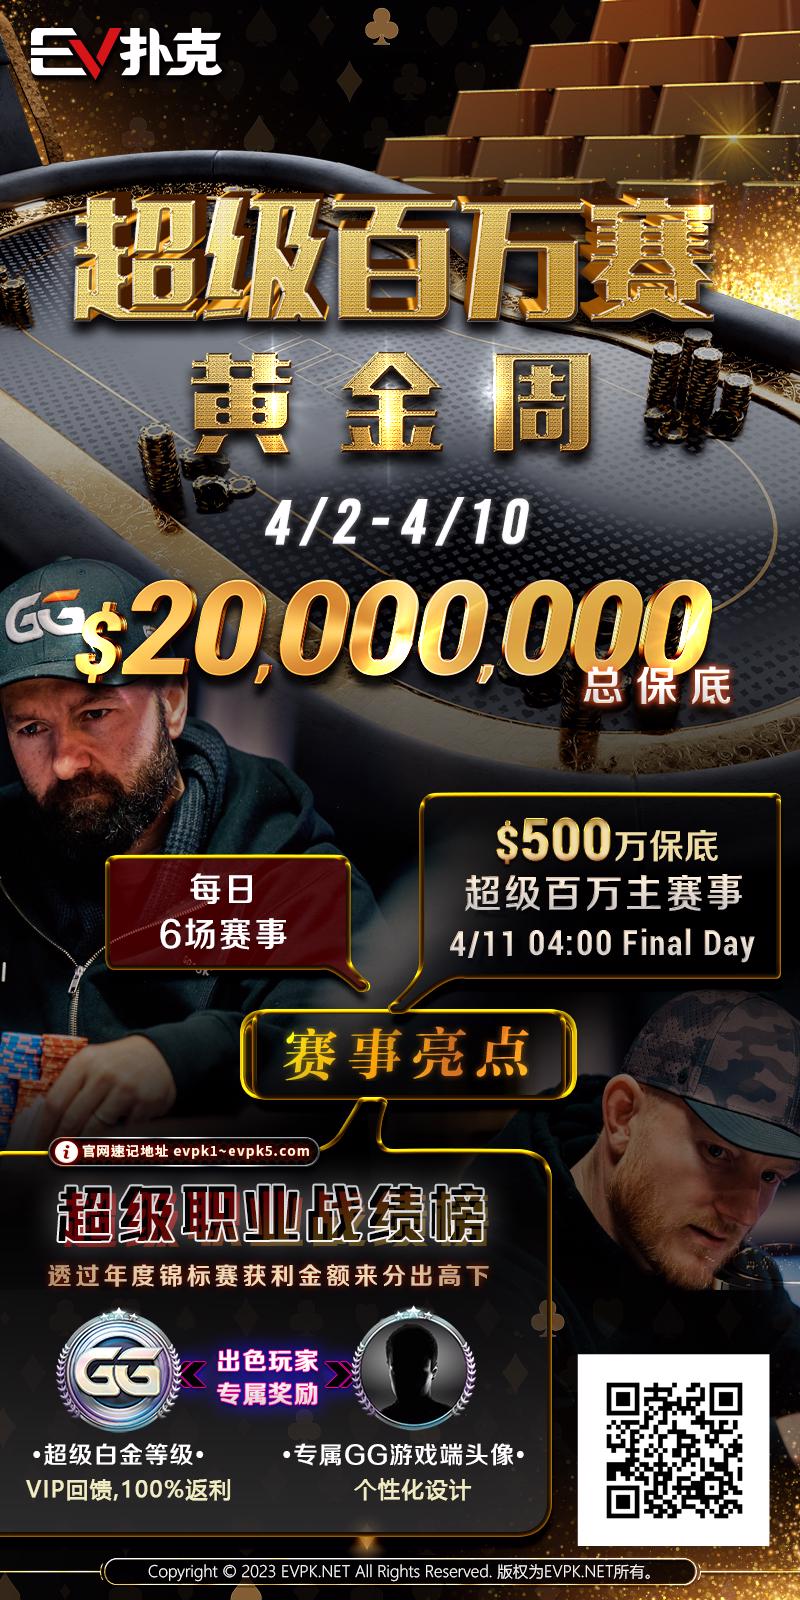 【EV 扑克】趣闻 | Isaac Haxton 成为首位在 2023 年赢得 500 万美元奖金的玩家